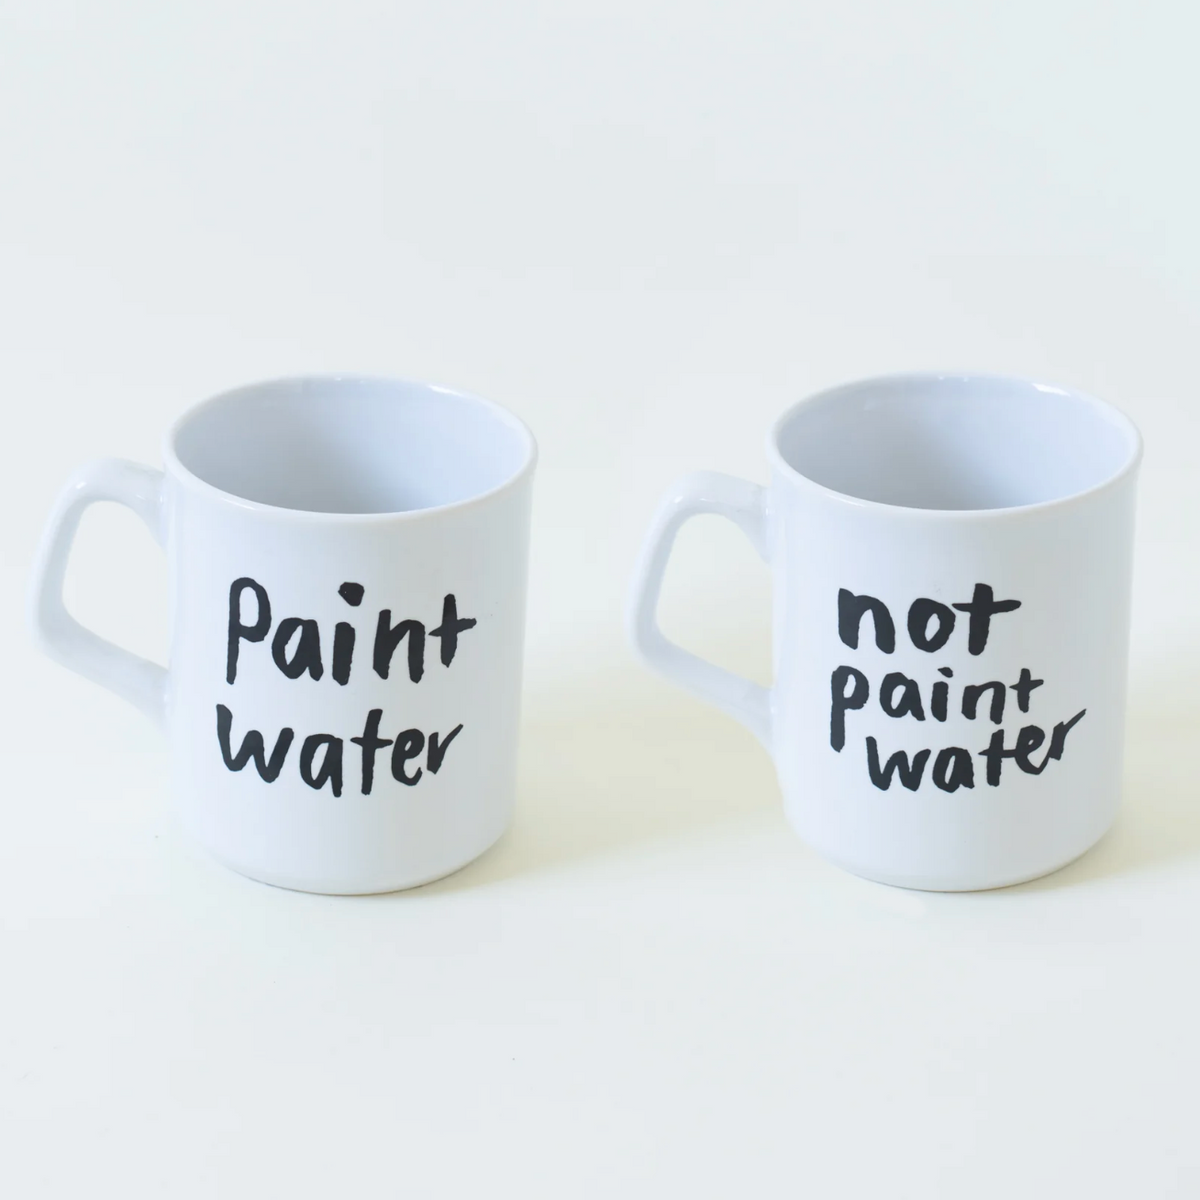 PAINT WATER/NOT Paint Water Drip Coffee Mug Set, Paint Water Set